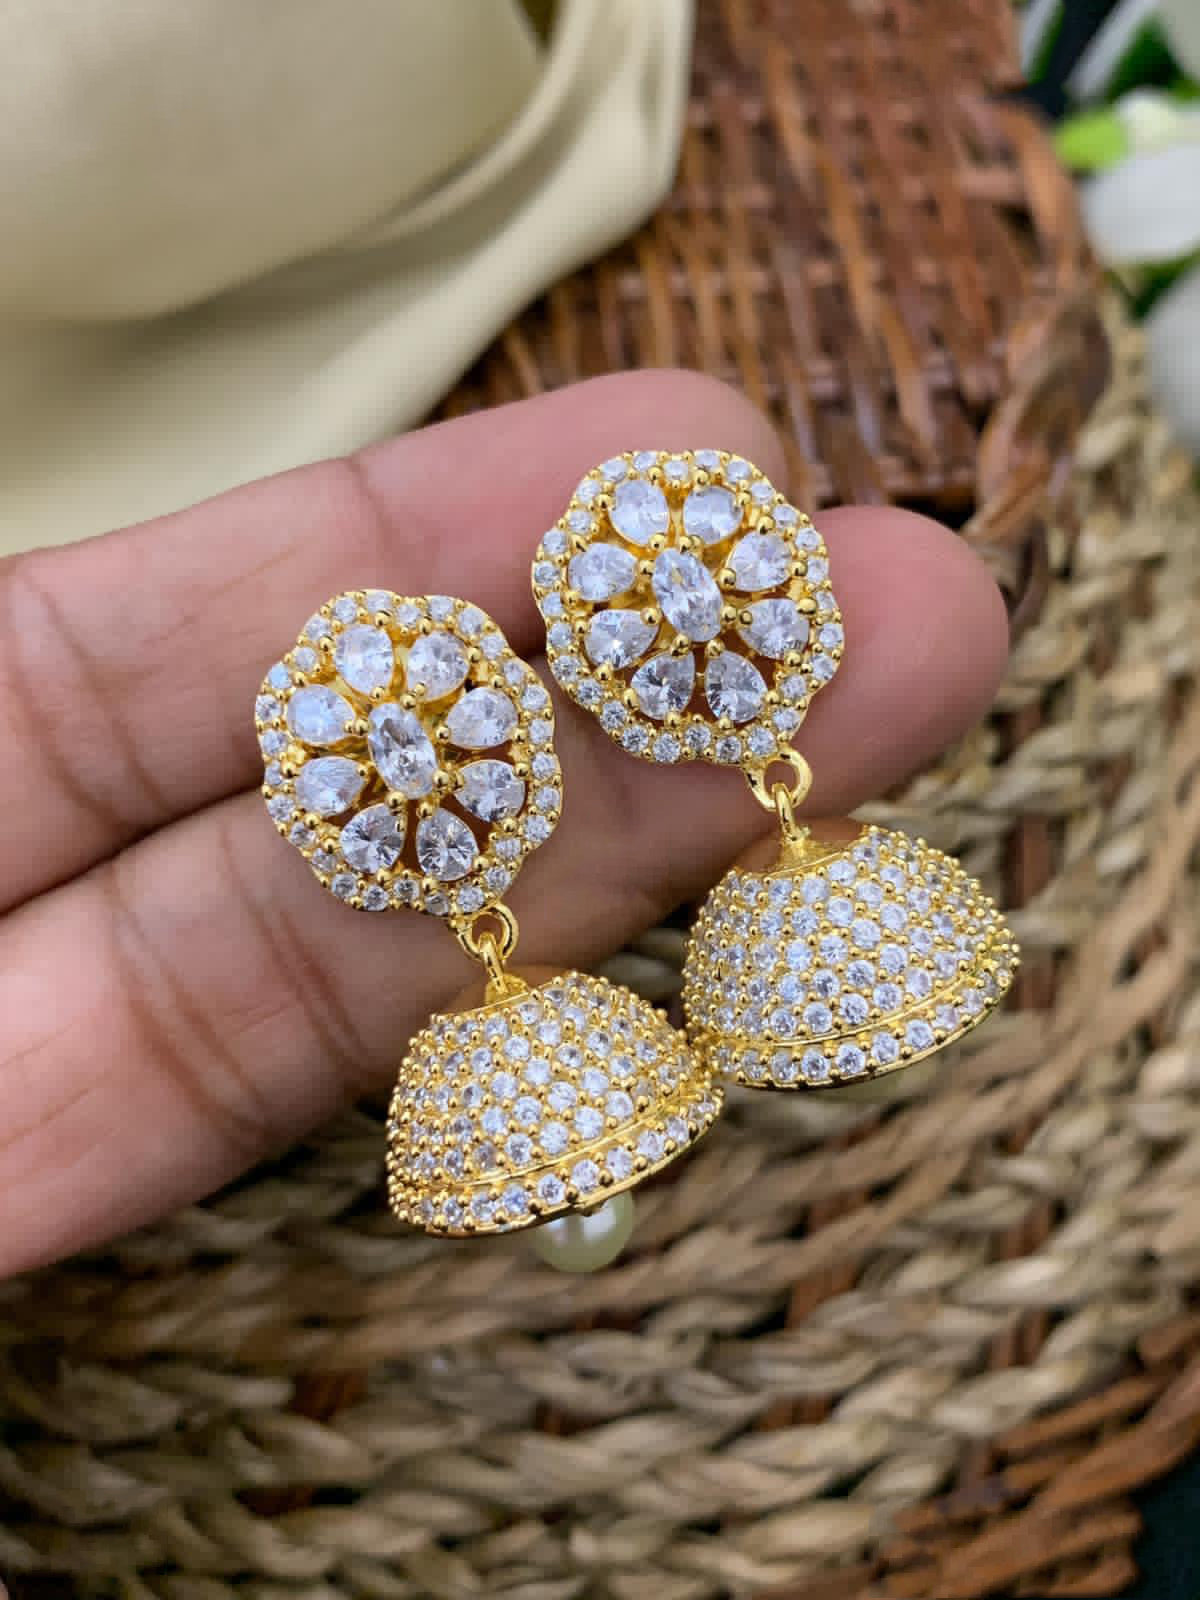 Indian Wedding Earrings – Timeless Indian Jewelry | Aurus